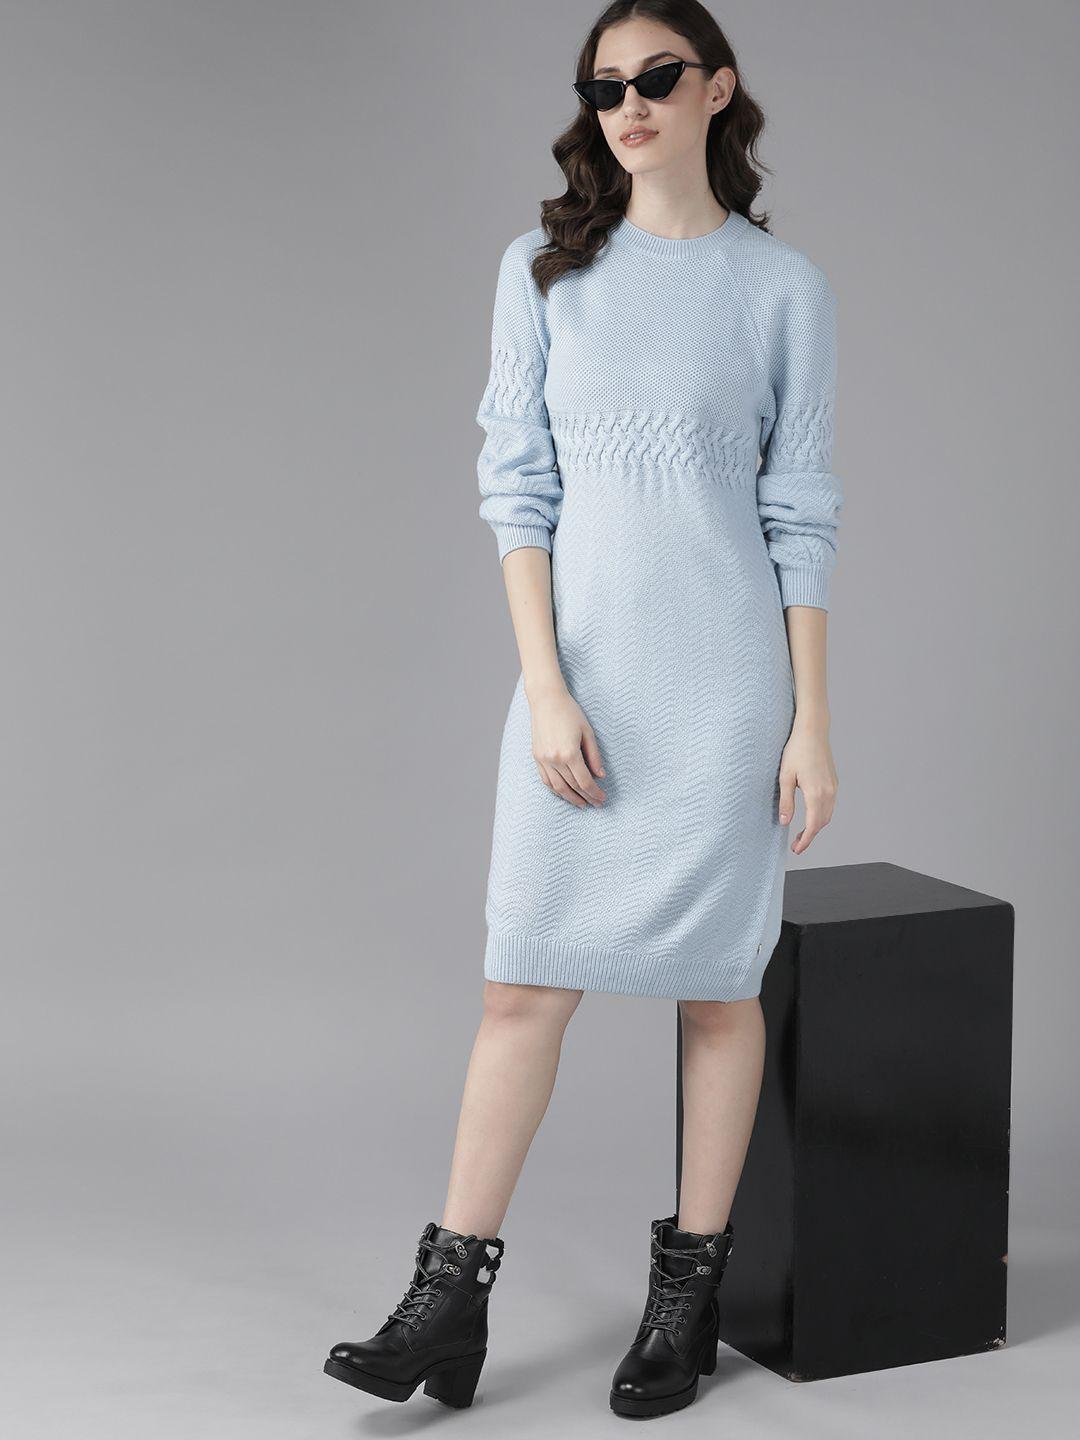 the roadster lifestyle co. women blue self-design sweater dress